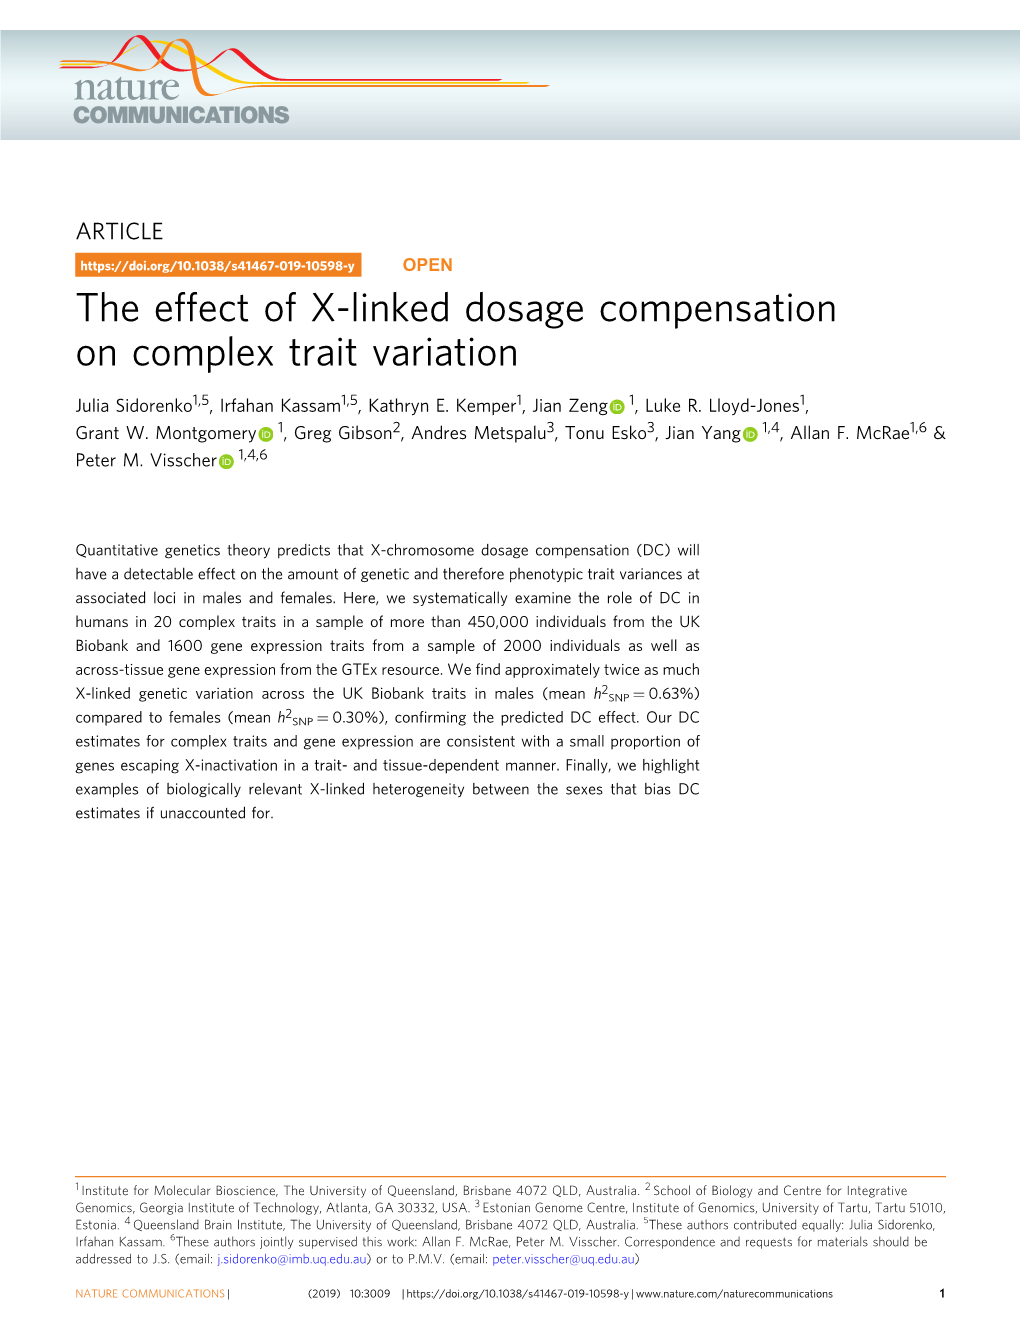 The Effect of X-Linked Dosage Compensation on Complex Trait Variation